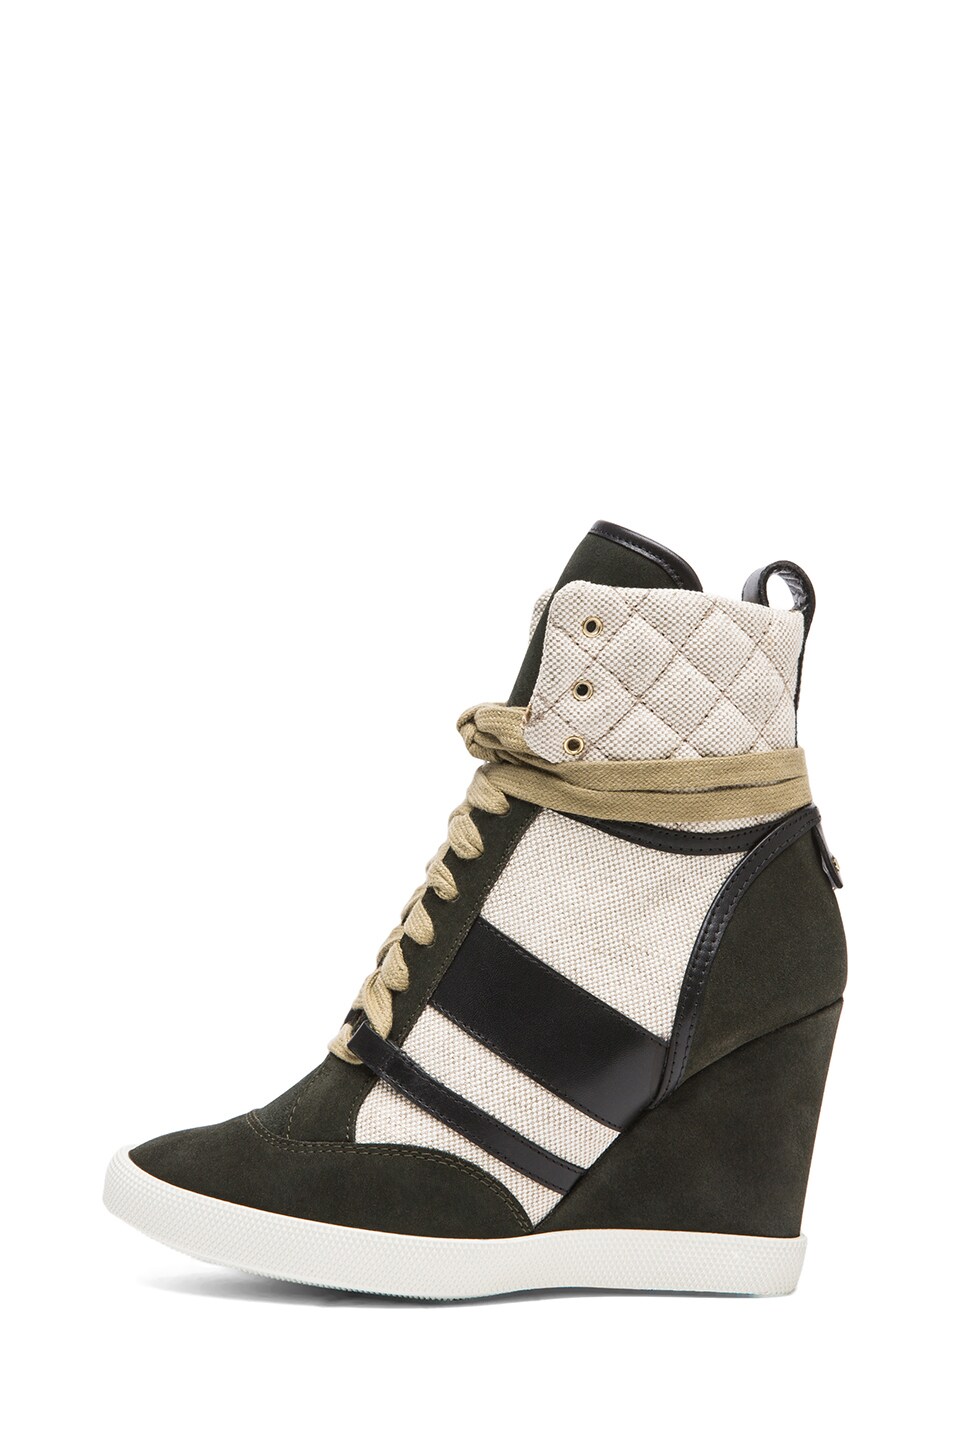 Image 1 of Chloe Suede & Canvas Sneaker Wedges in Grey & White & Black